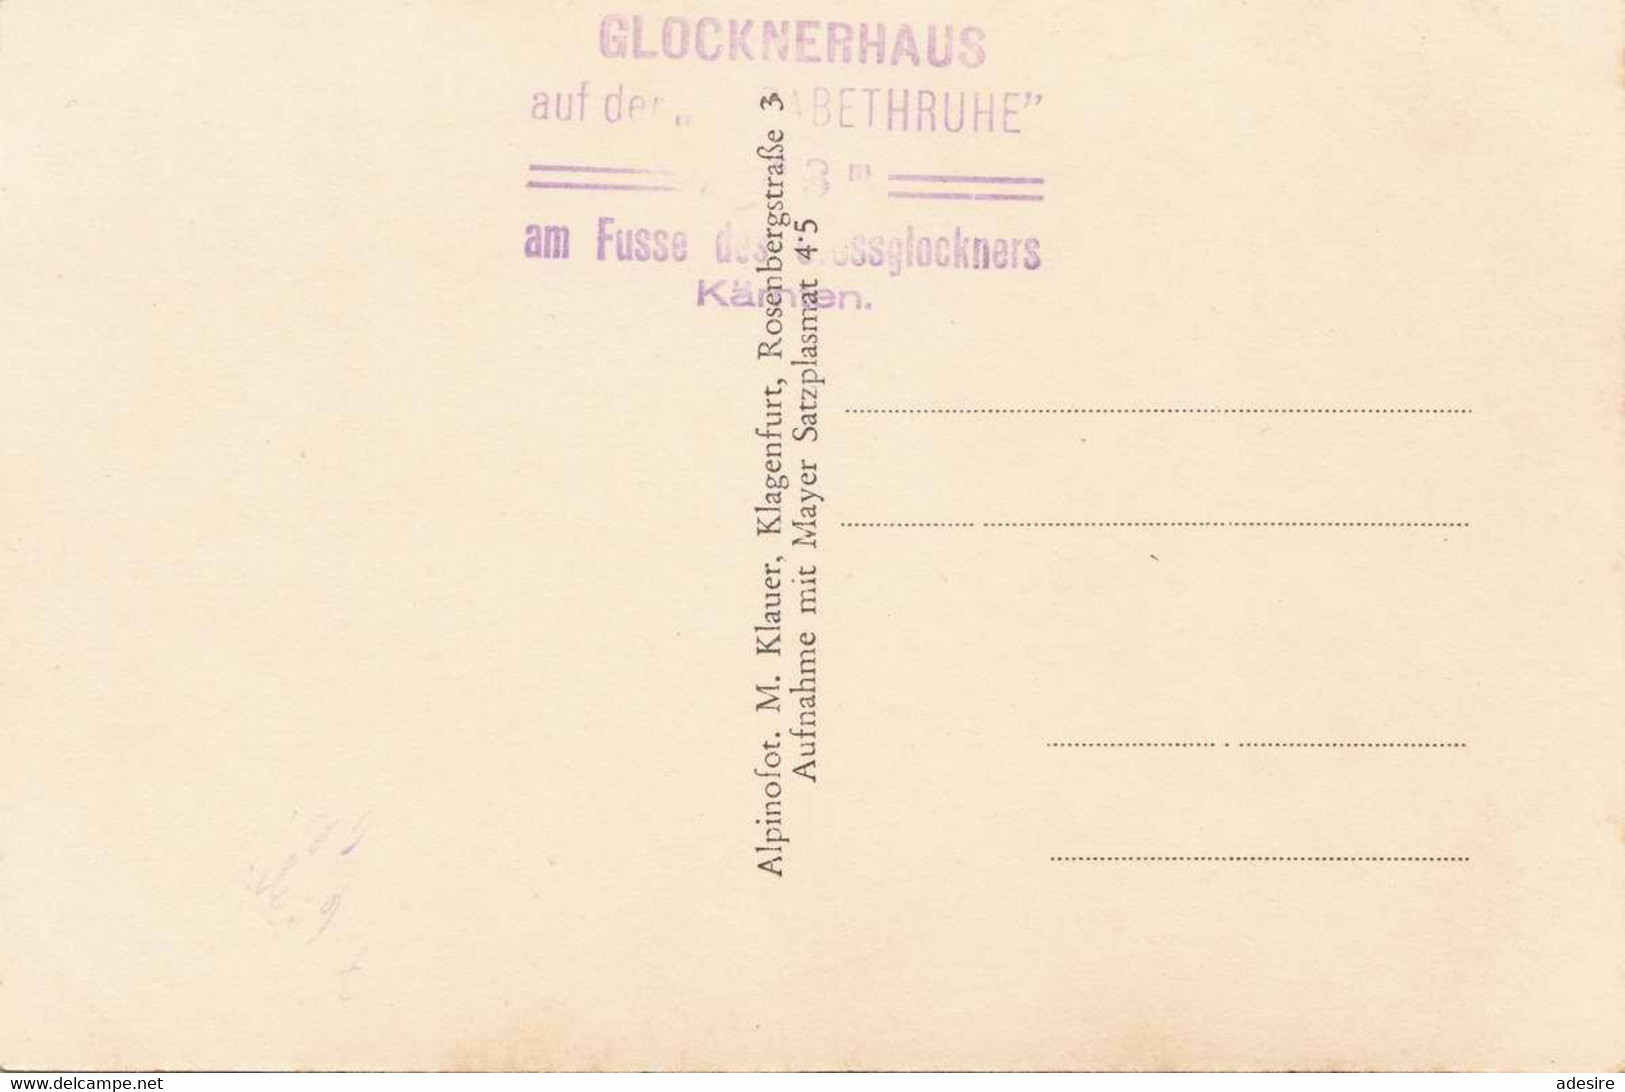 HEILIGENBLUT Mit Grossglockner, Fotokarte 1935? - Heiligenblut